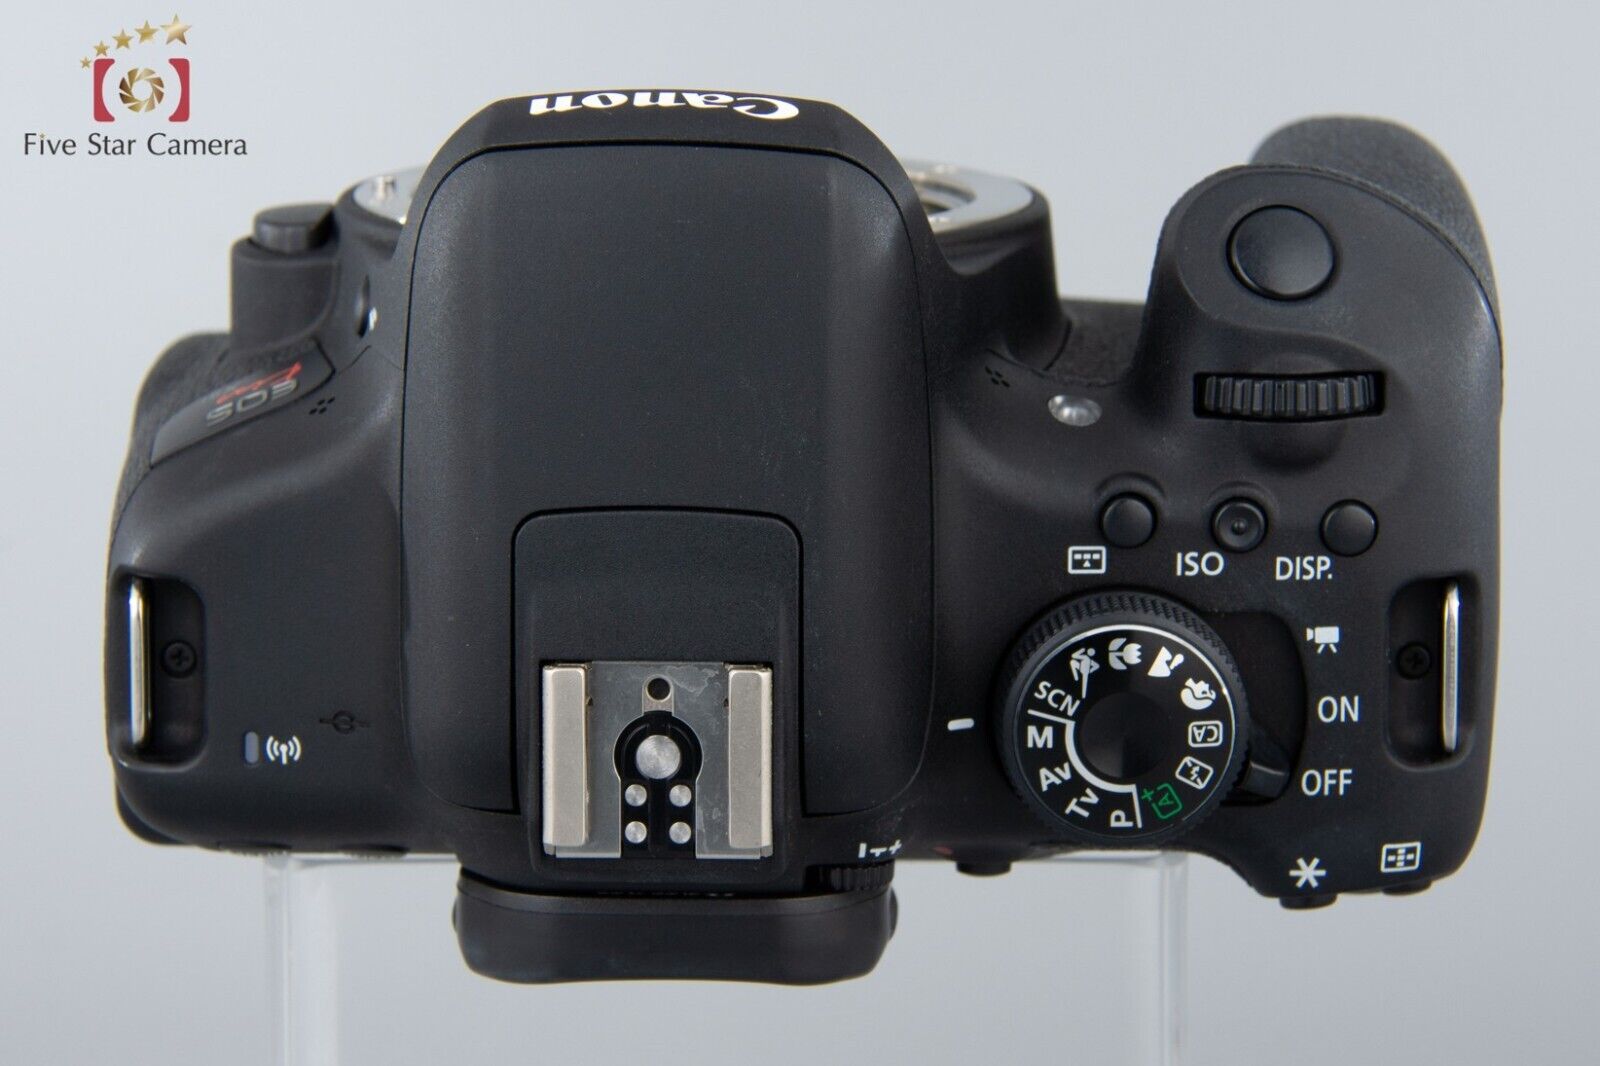 Near Mint!! Canon EOS Kiss X8i / Rebel T6i / 750D 24.2 MP DSLR Camera Body